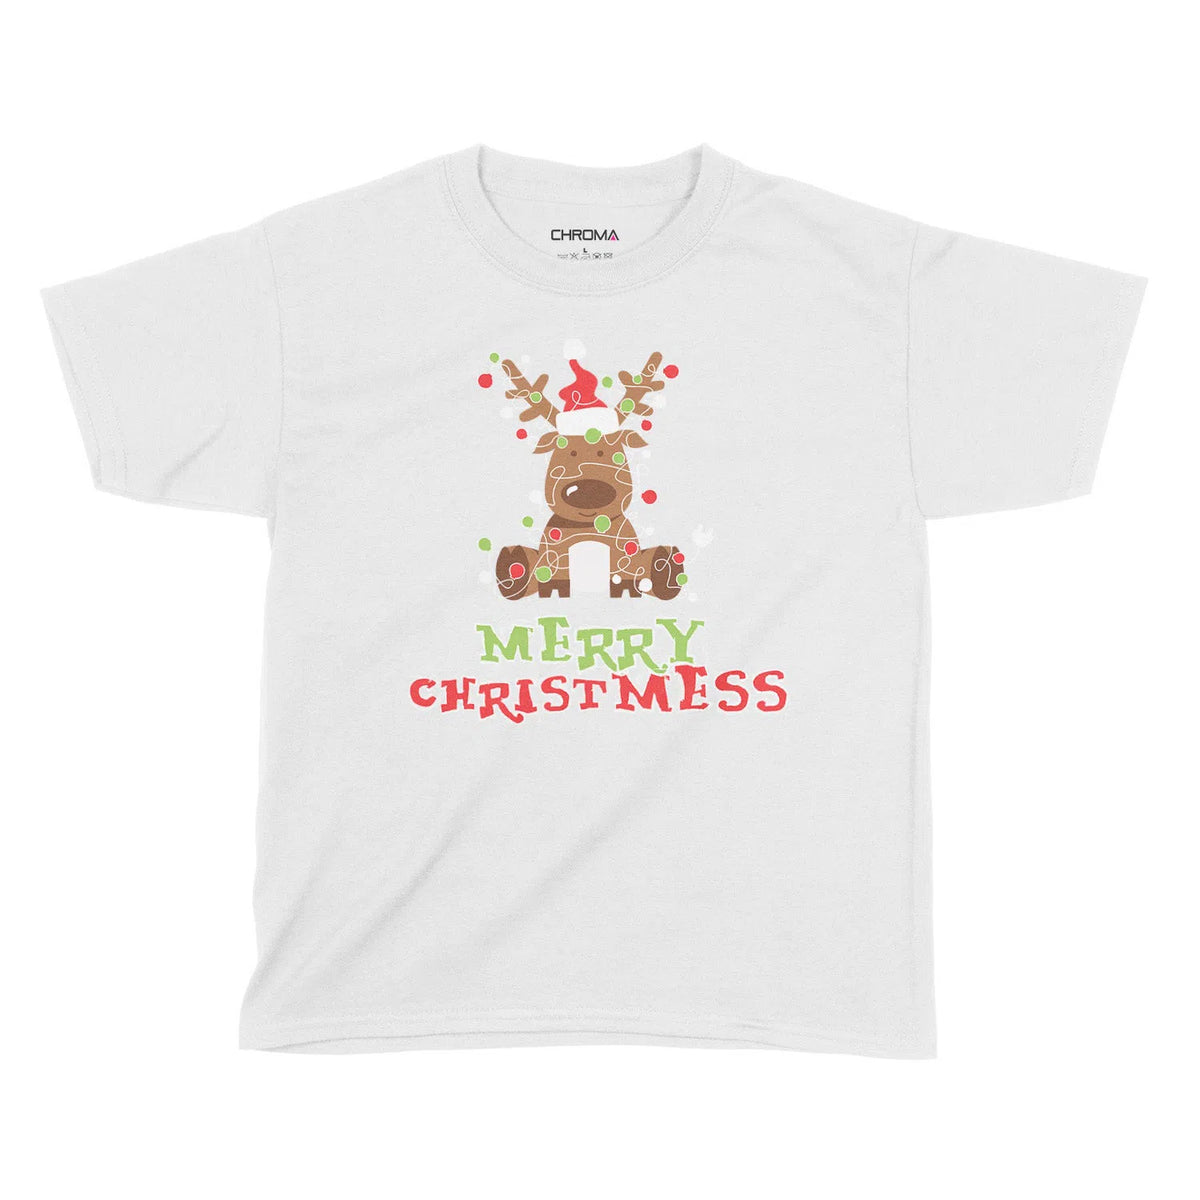 Merry Christmess | Kids Christmas T-Shirt Chroma Clothing